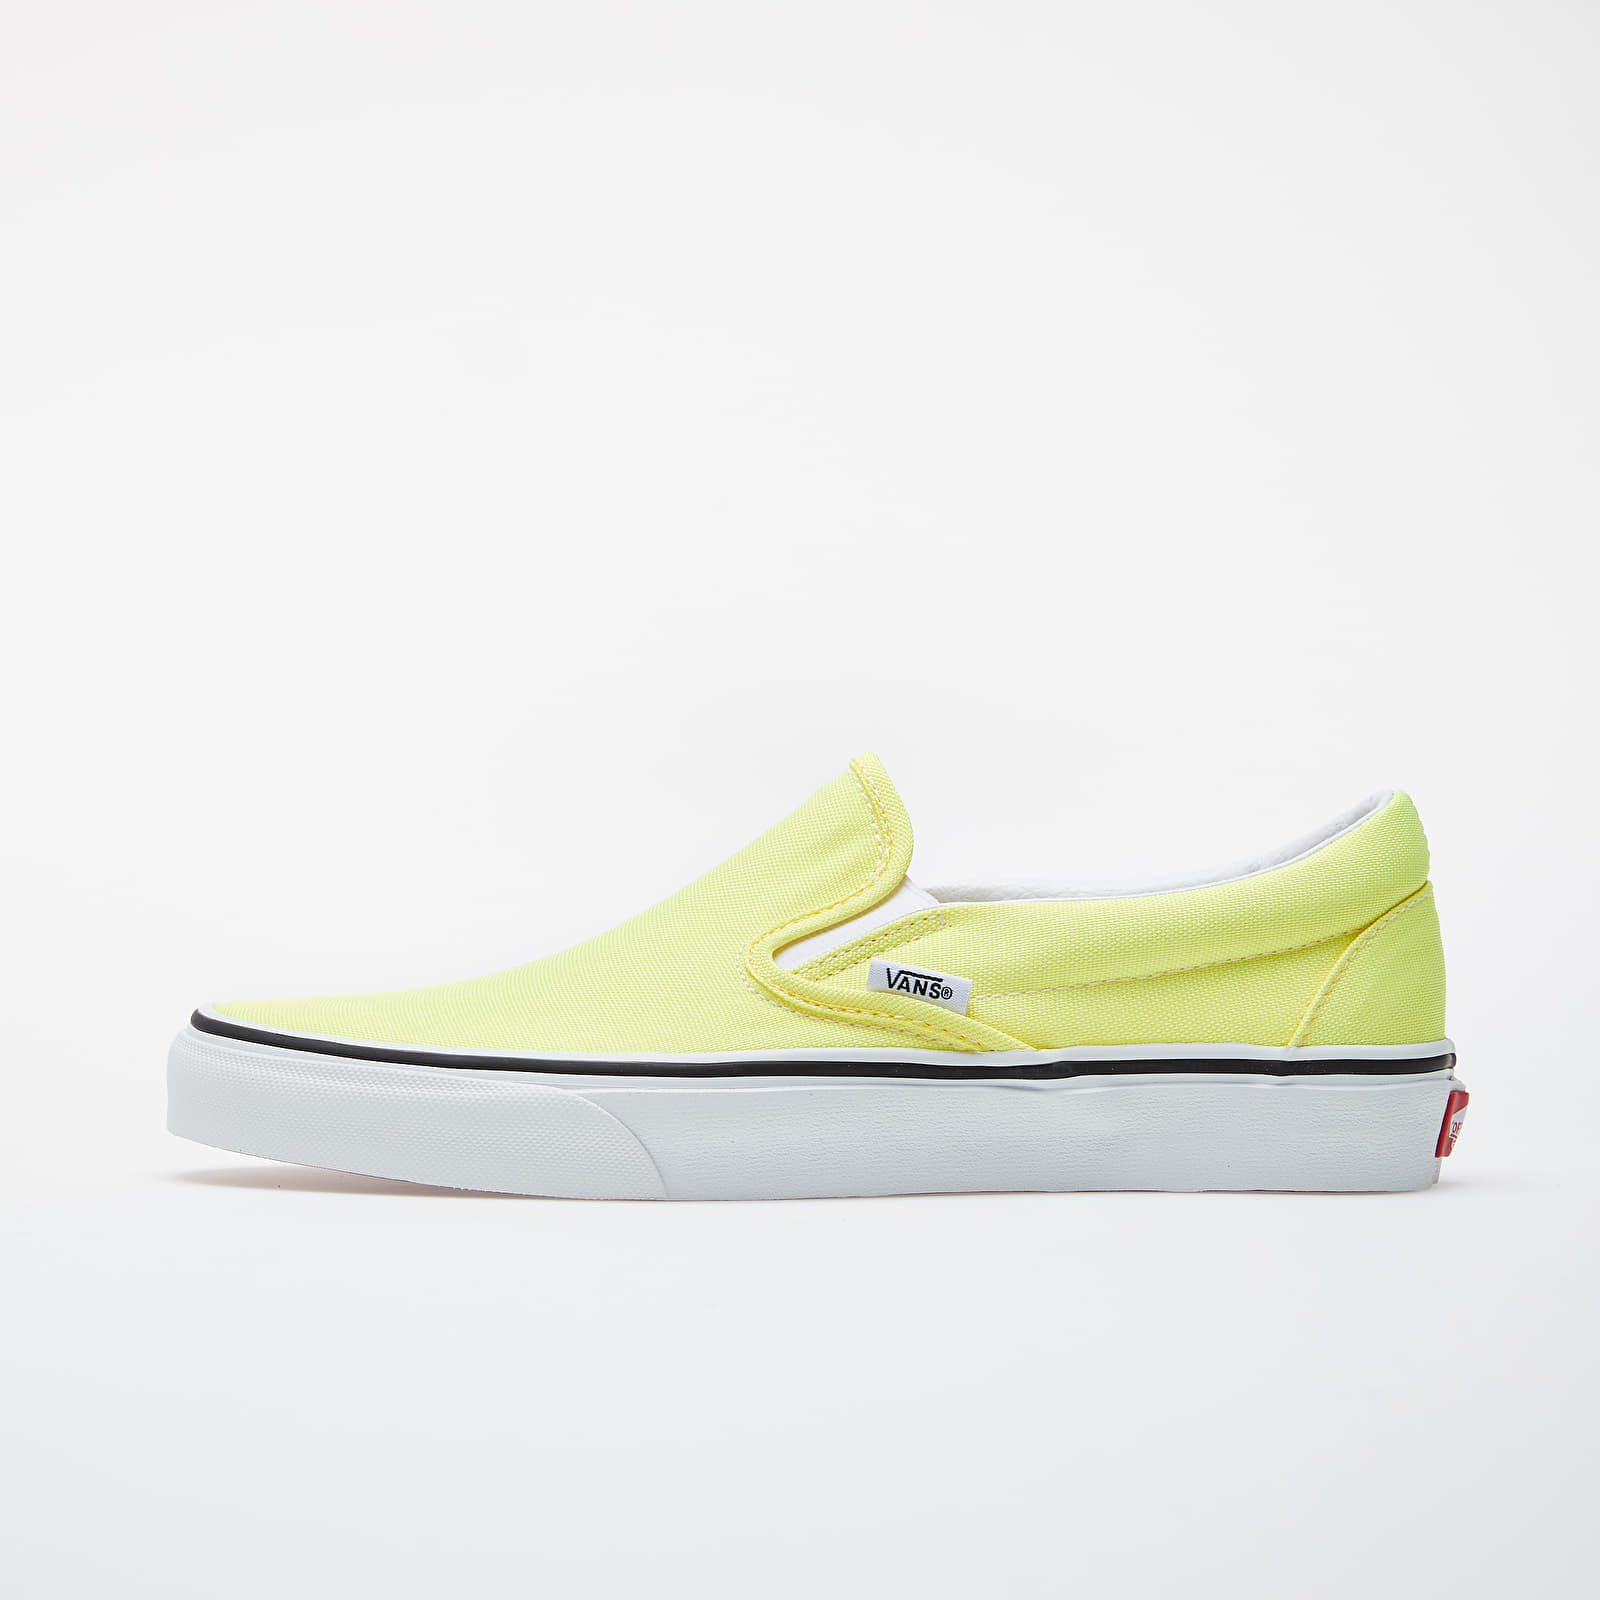 Pánske tenisky a topánky Vans Classic Slip-On (Neon) Lemon Tonic/ True White